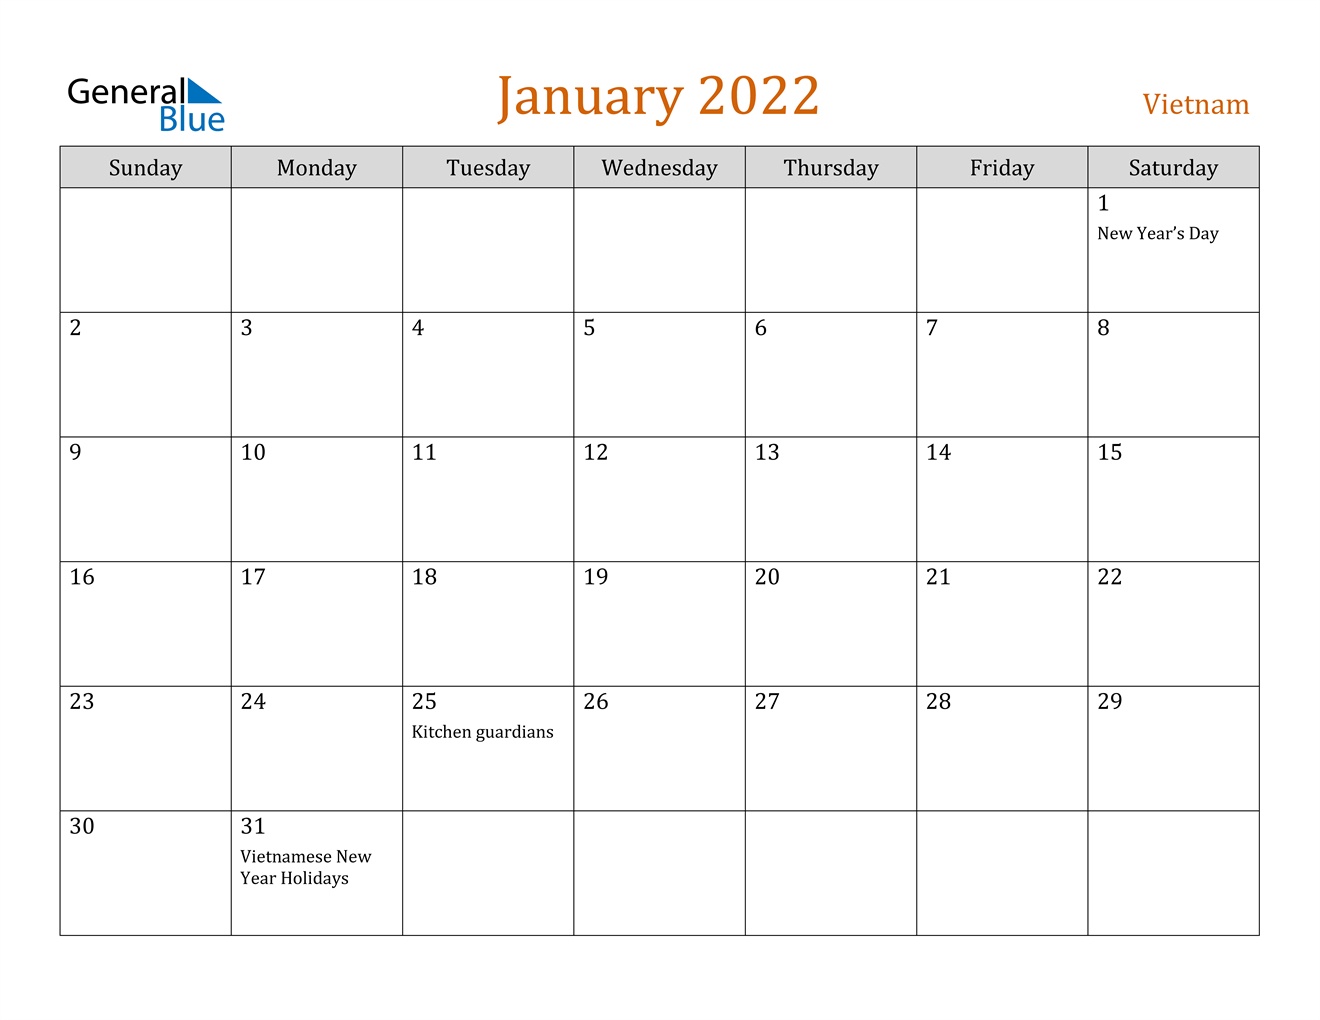 January 2022 Calendar - Vietnam